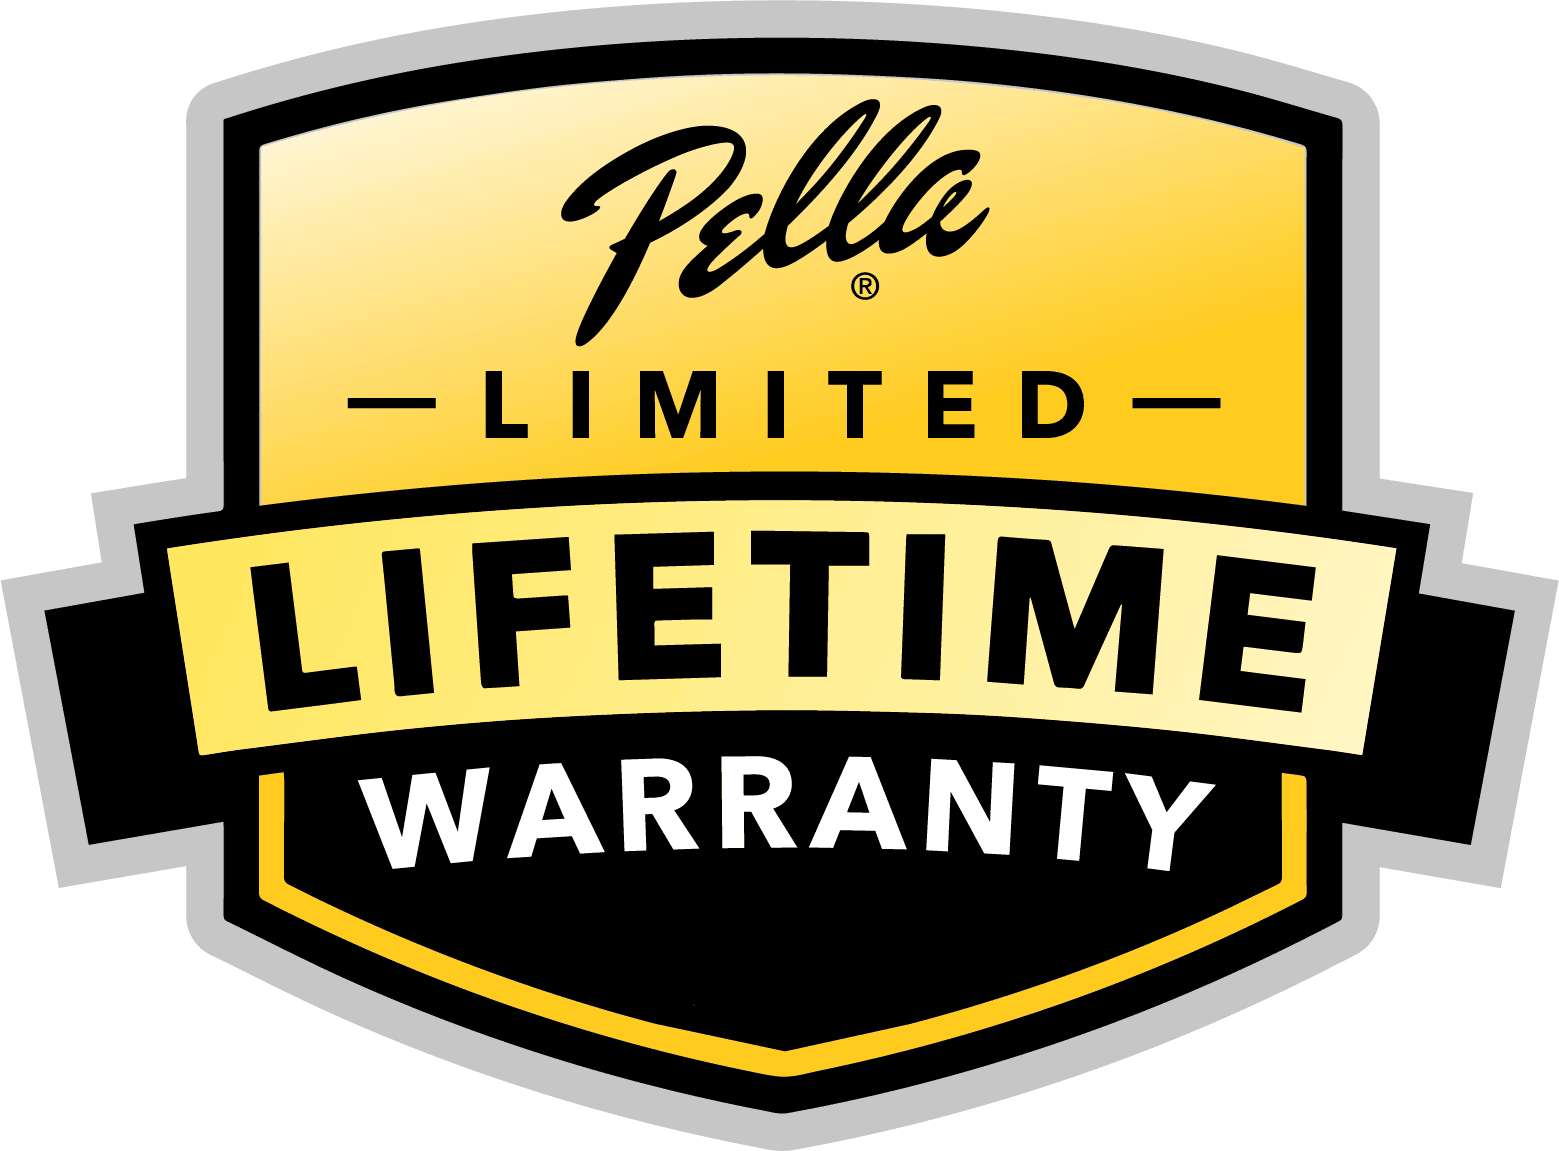 Pella Lifetine Warranty